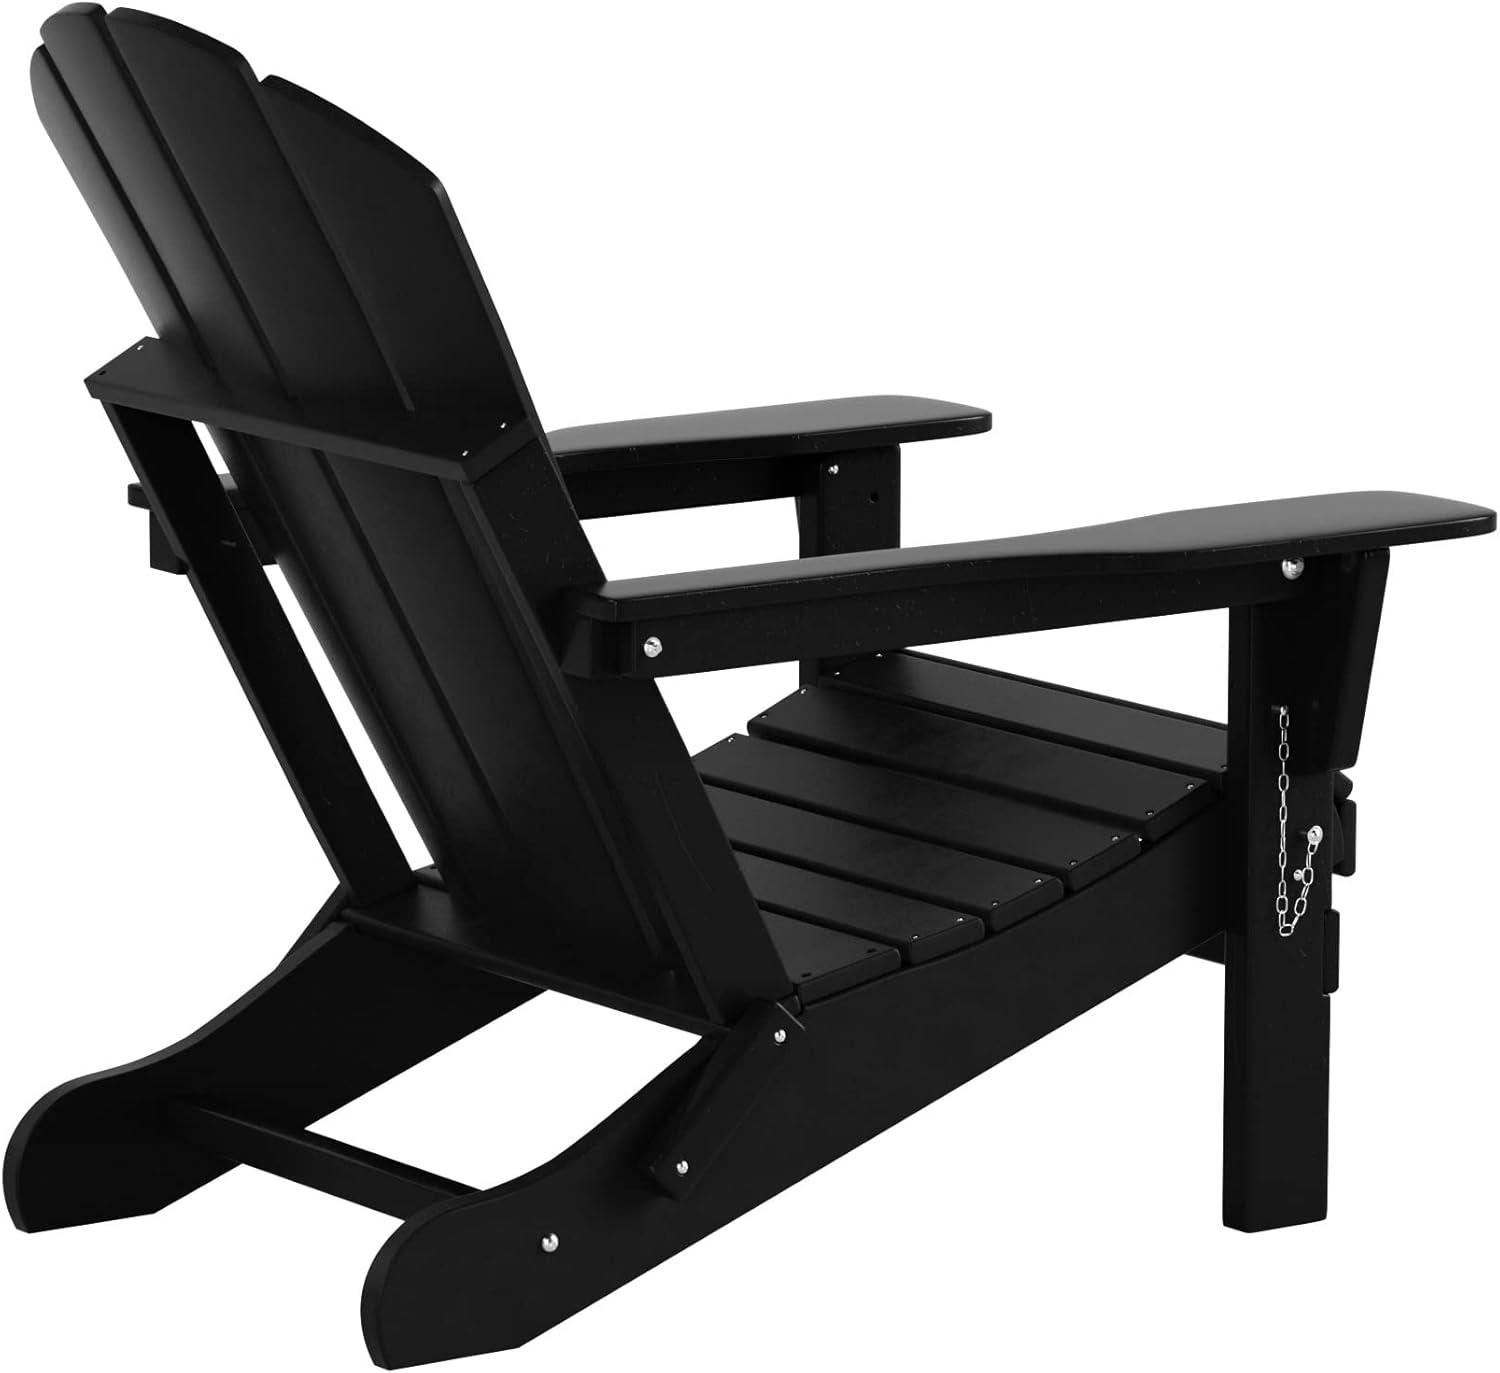 Sleek Black Polyethylene Folding Adirondack Chair Set